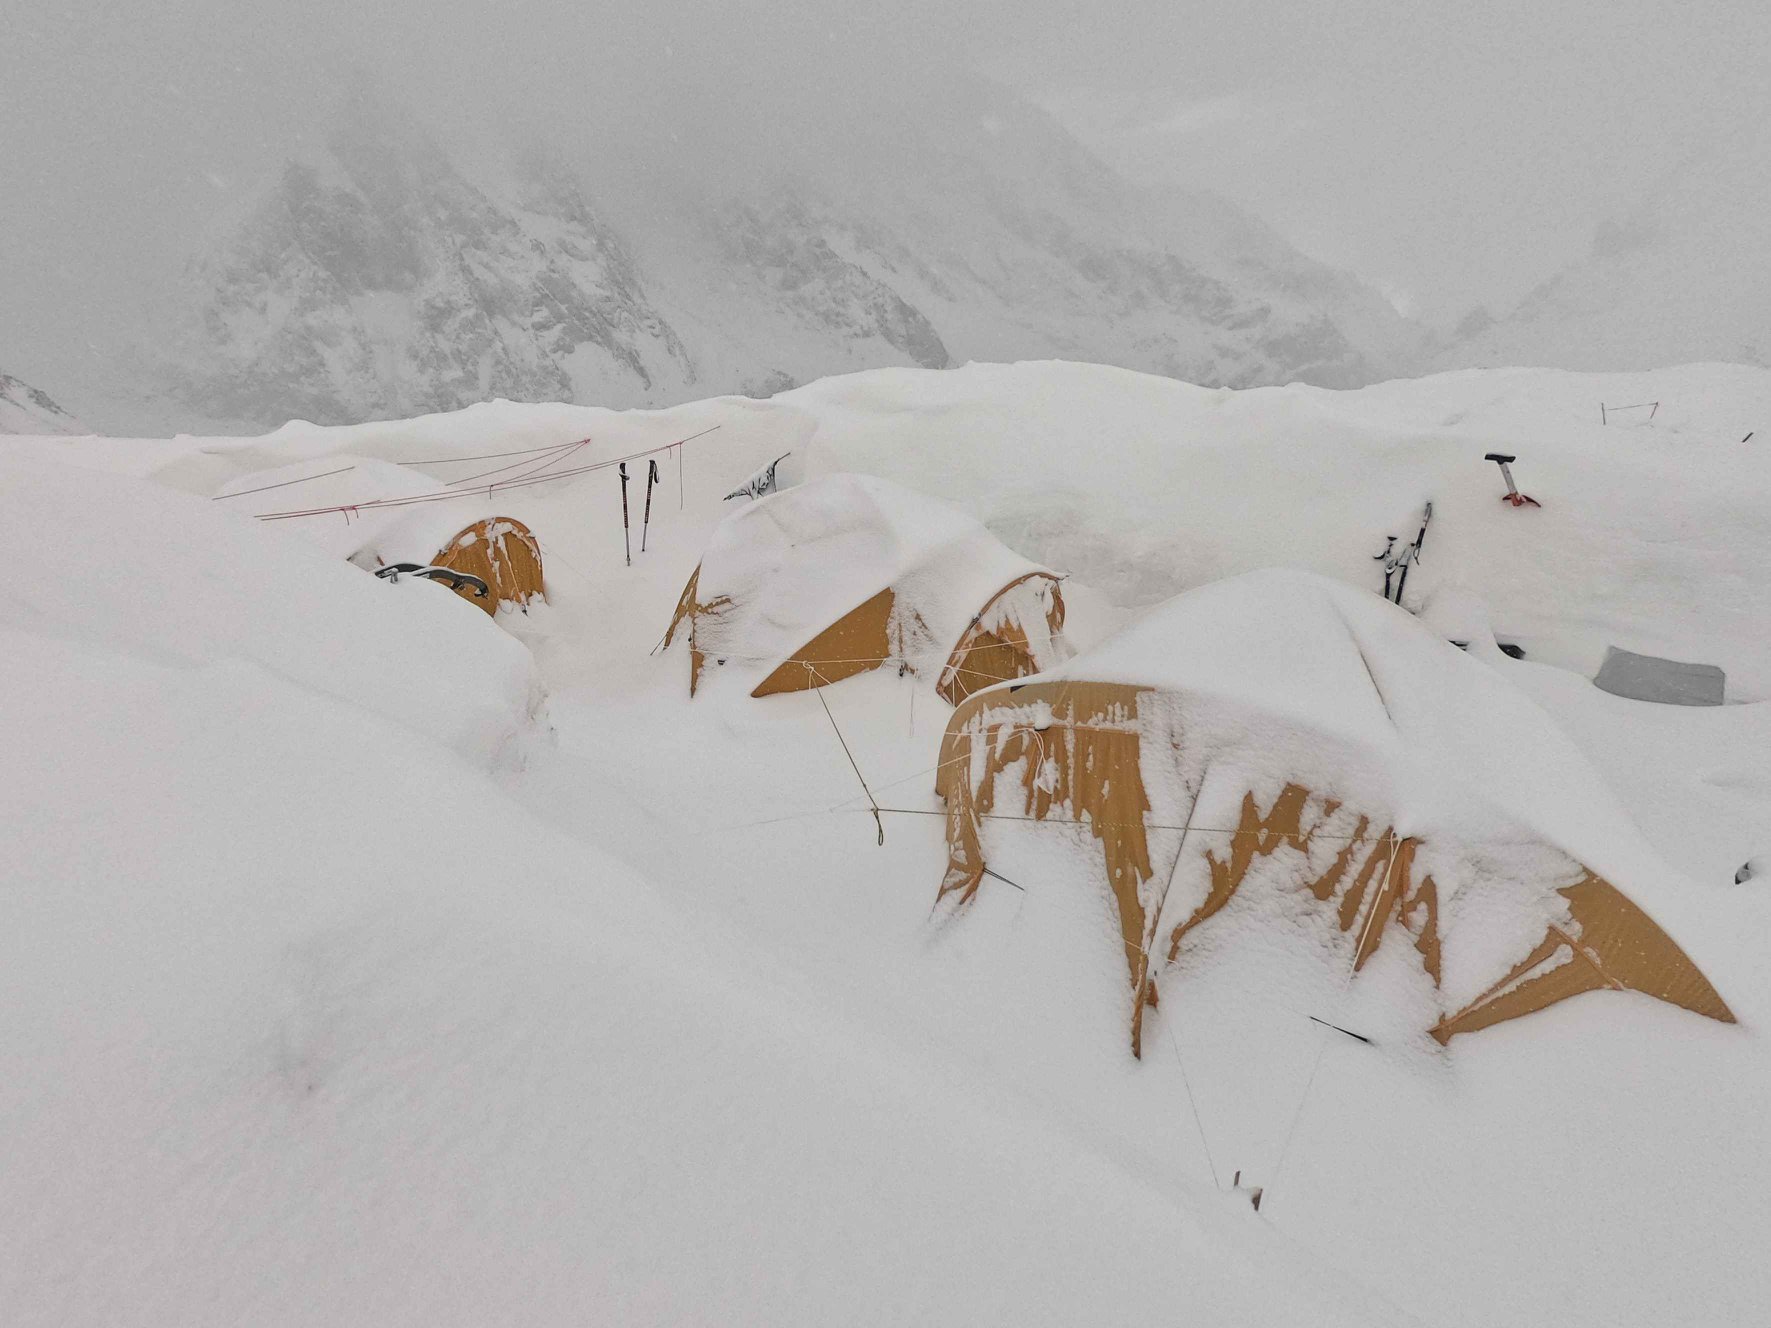 Базовый лагерь Батура Сар под снегом. Фото Piotr Tomala